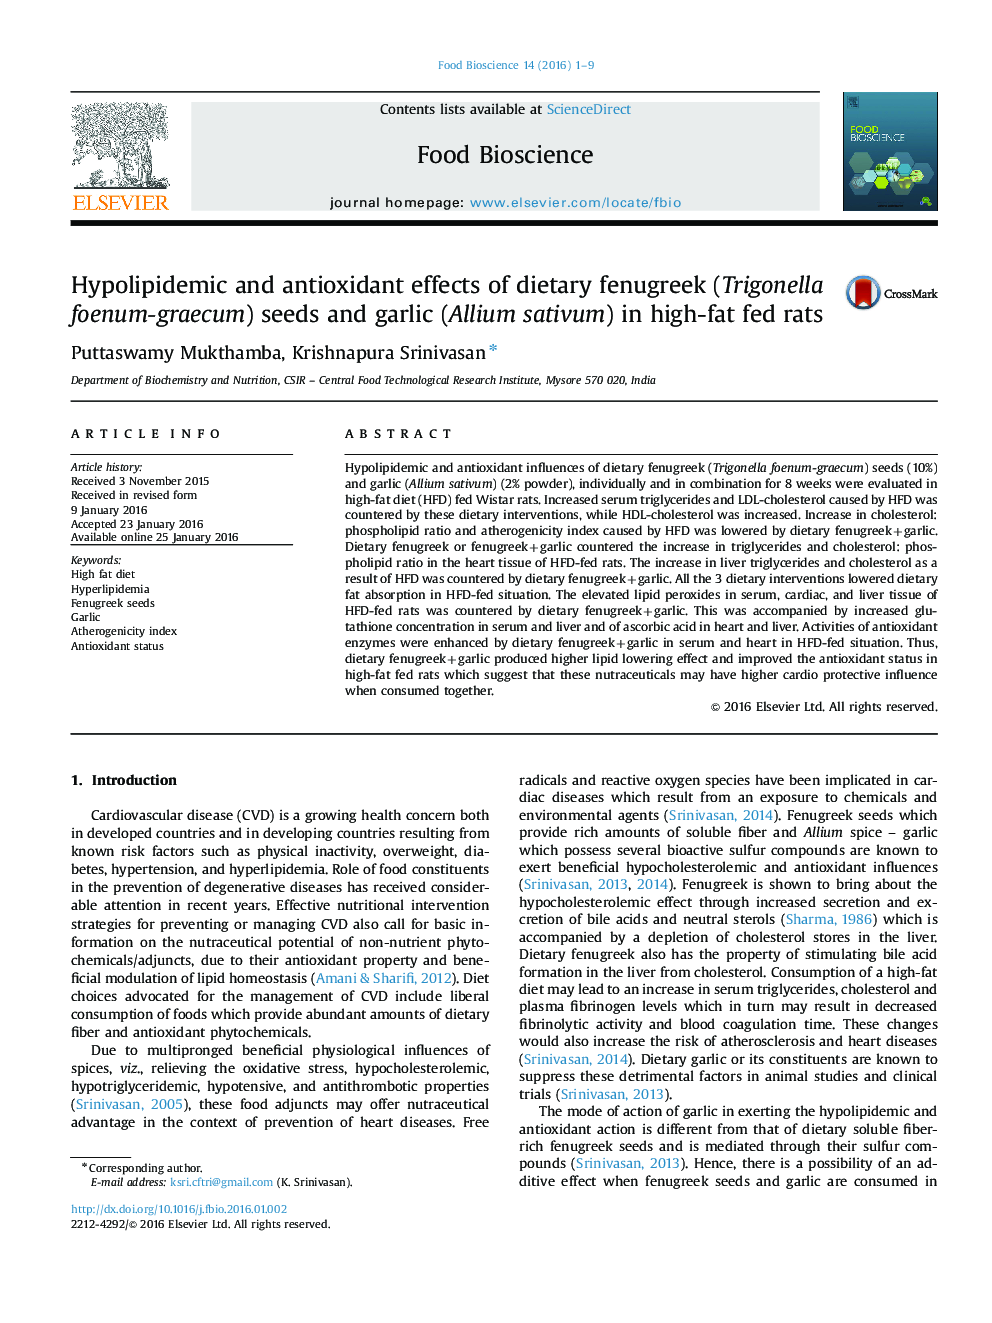 Hypolipidemic and antioxidant effects of dietary fenugreek (Trigonella foenum-graecum) seeds and garlic (Allium sativum) in high-fat fed rats